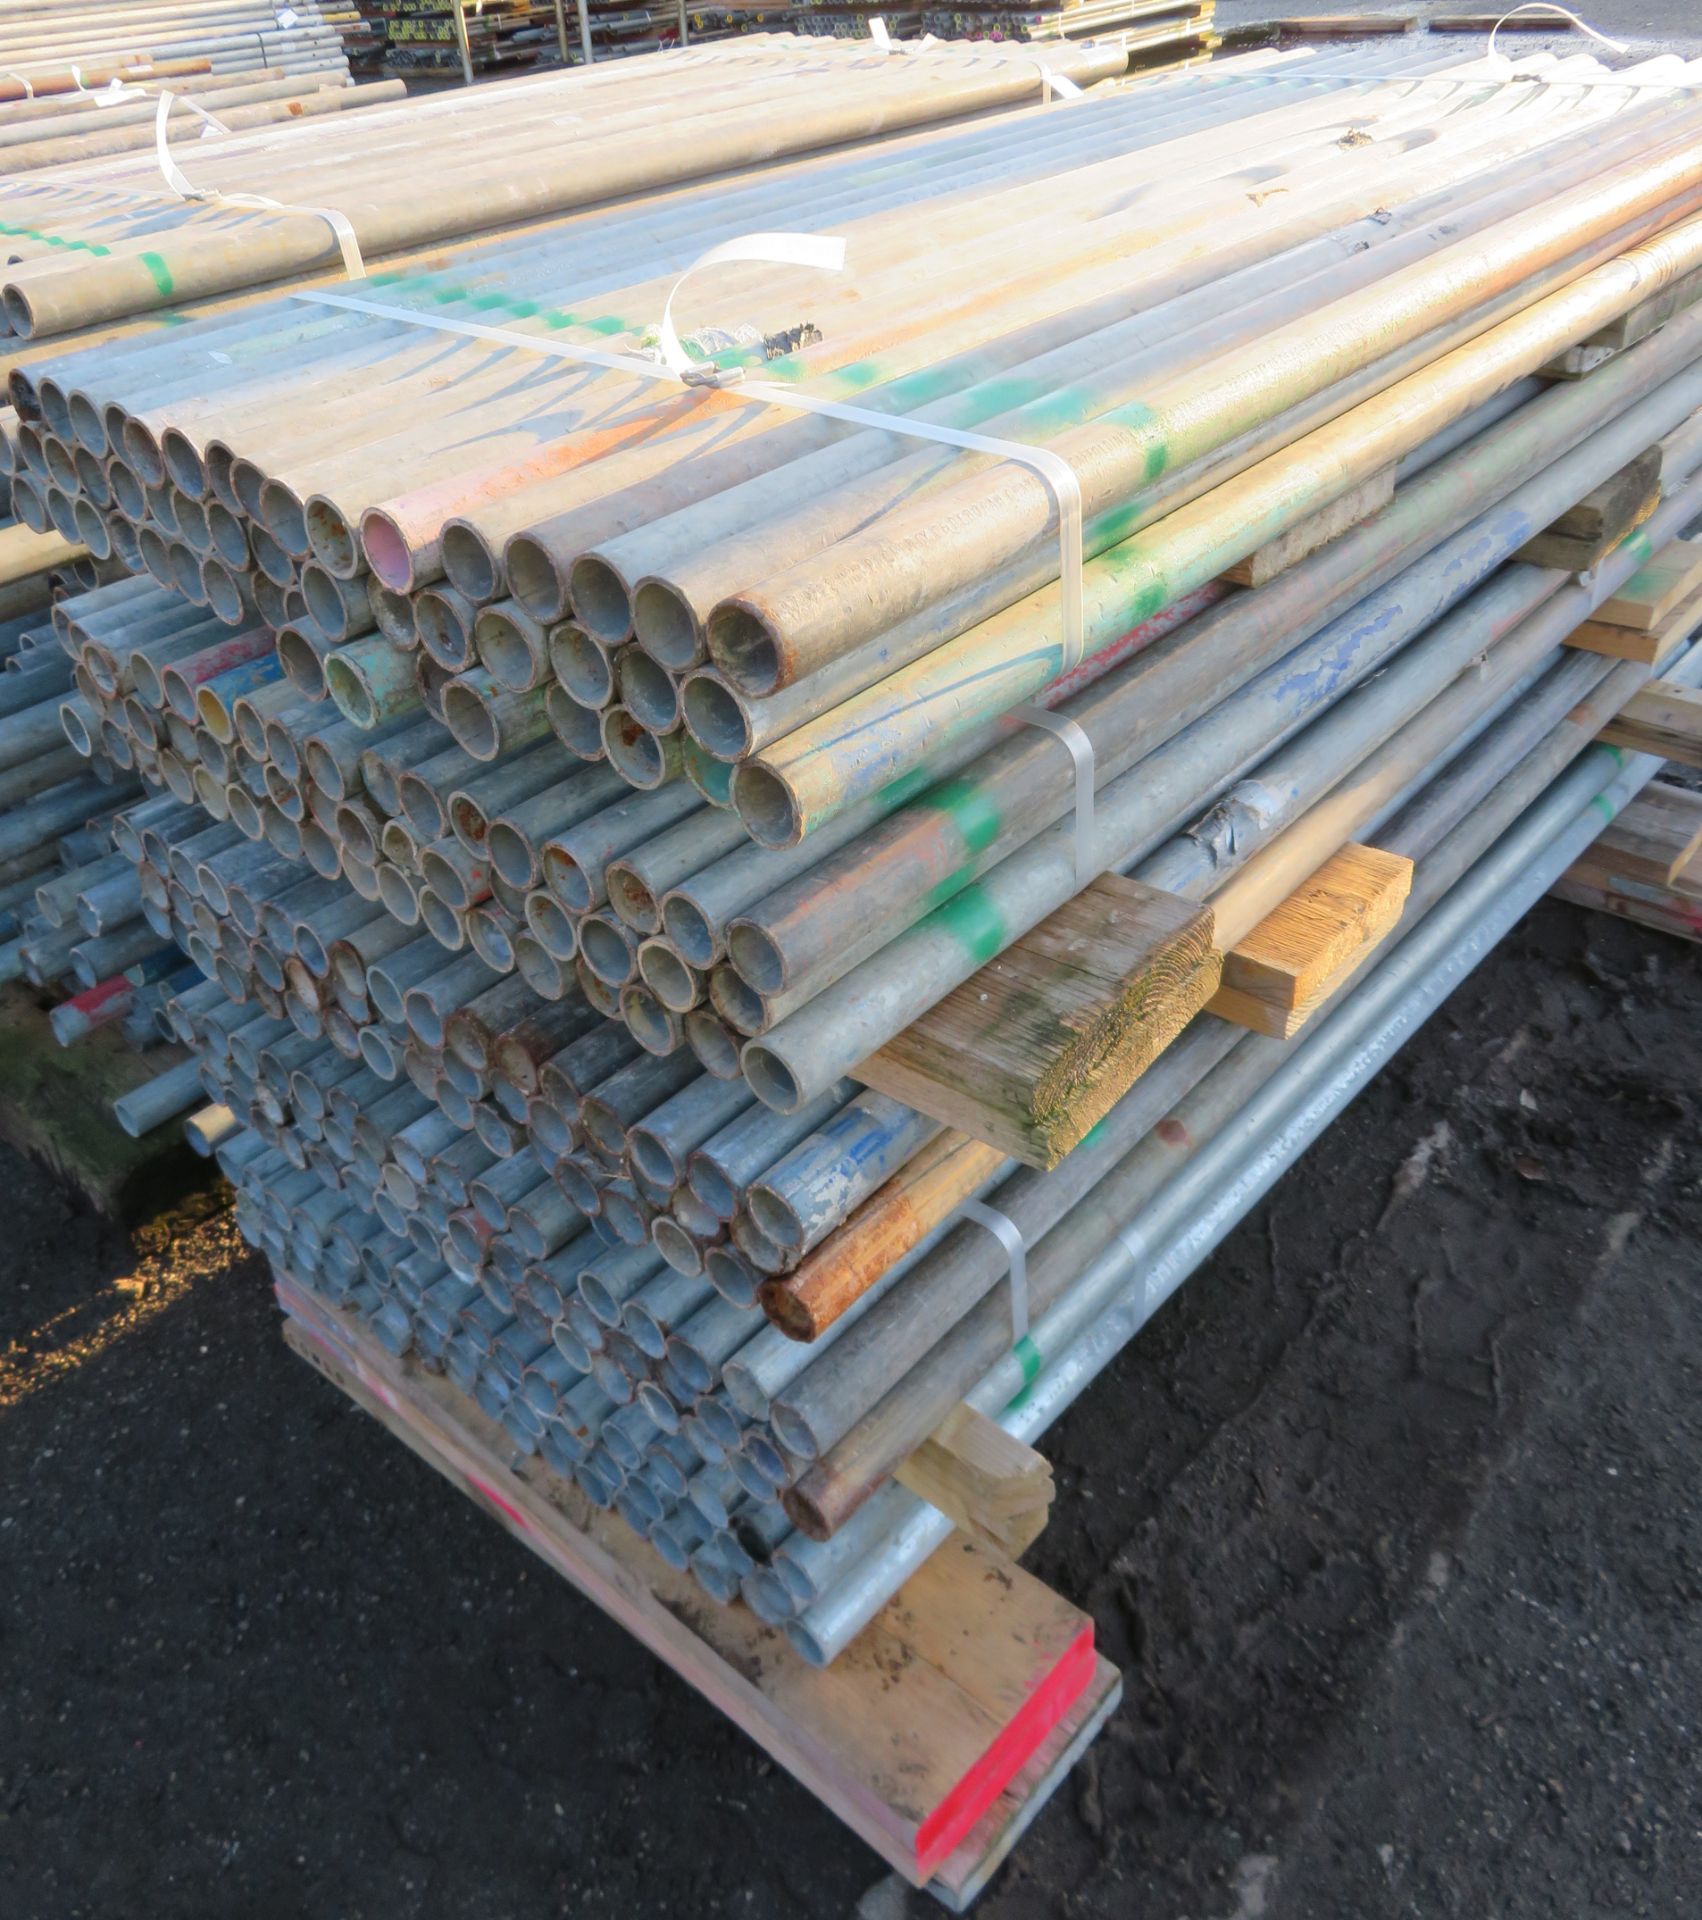 250x Various Length Galvanised Steel Scaffolding Poles. Lengths Range Between 7ft - 5.5ft. - Image 5 of 5